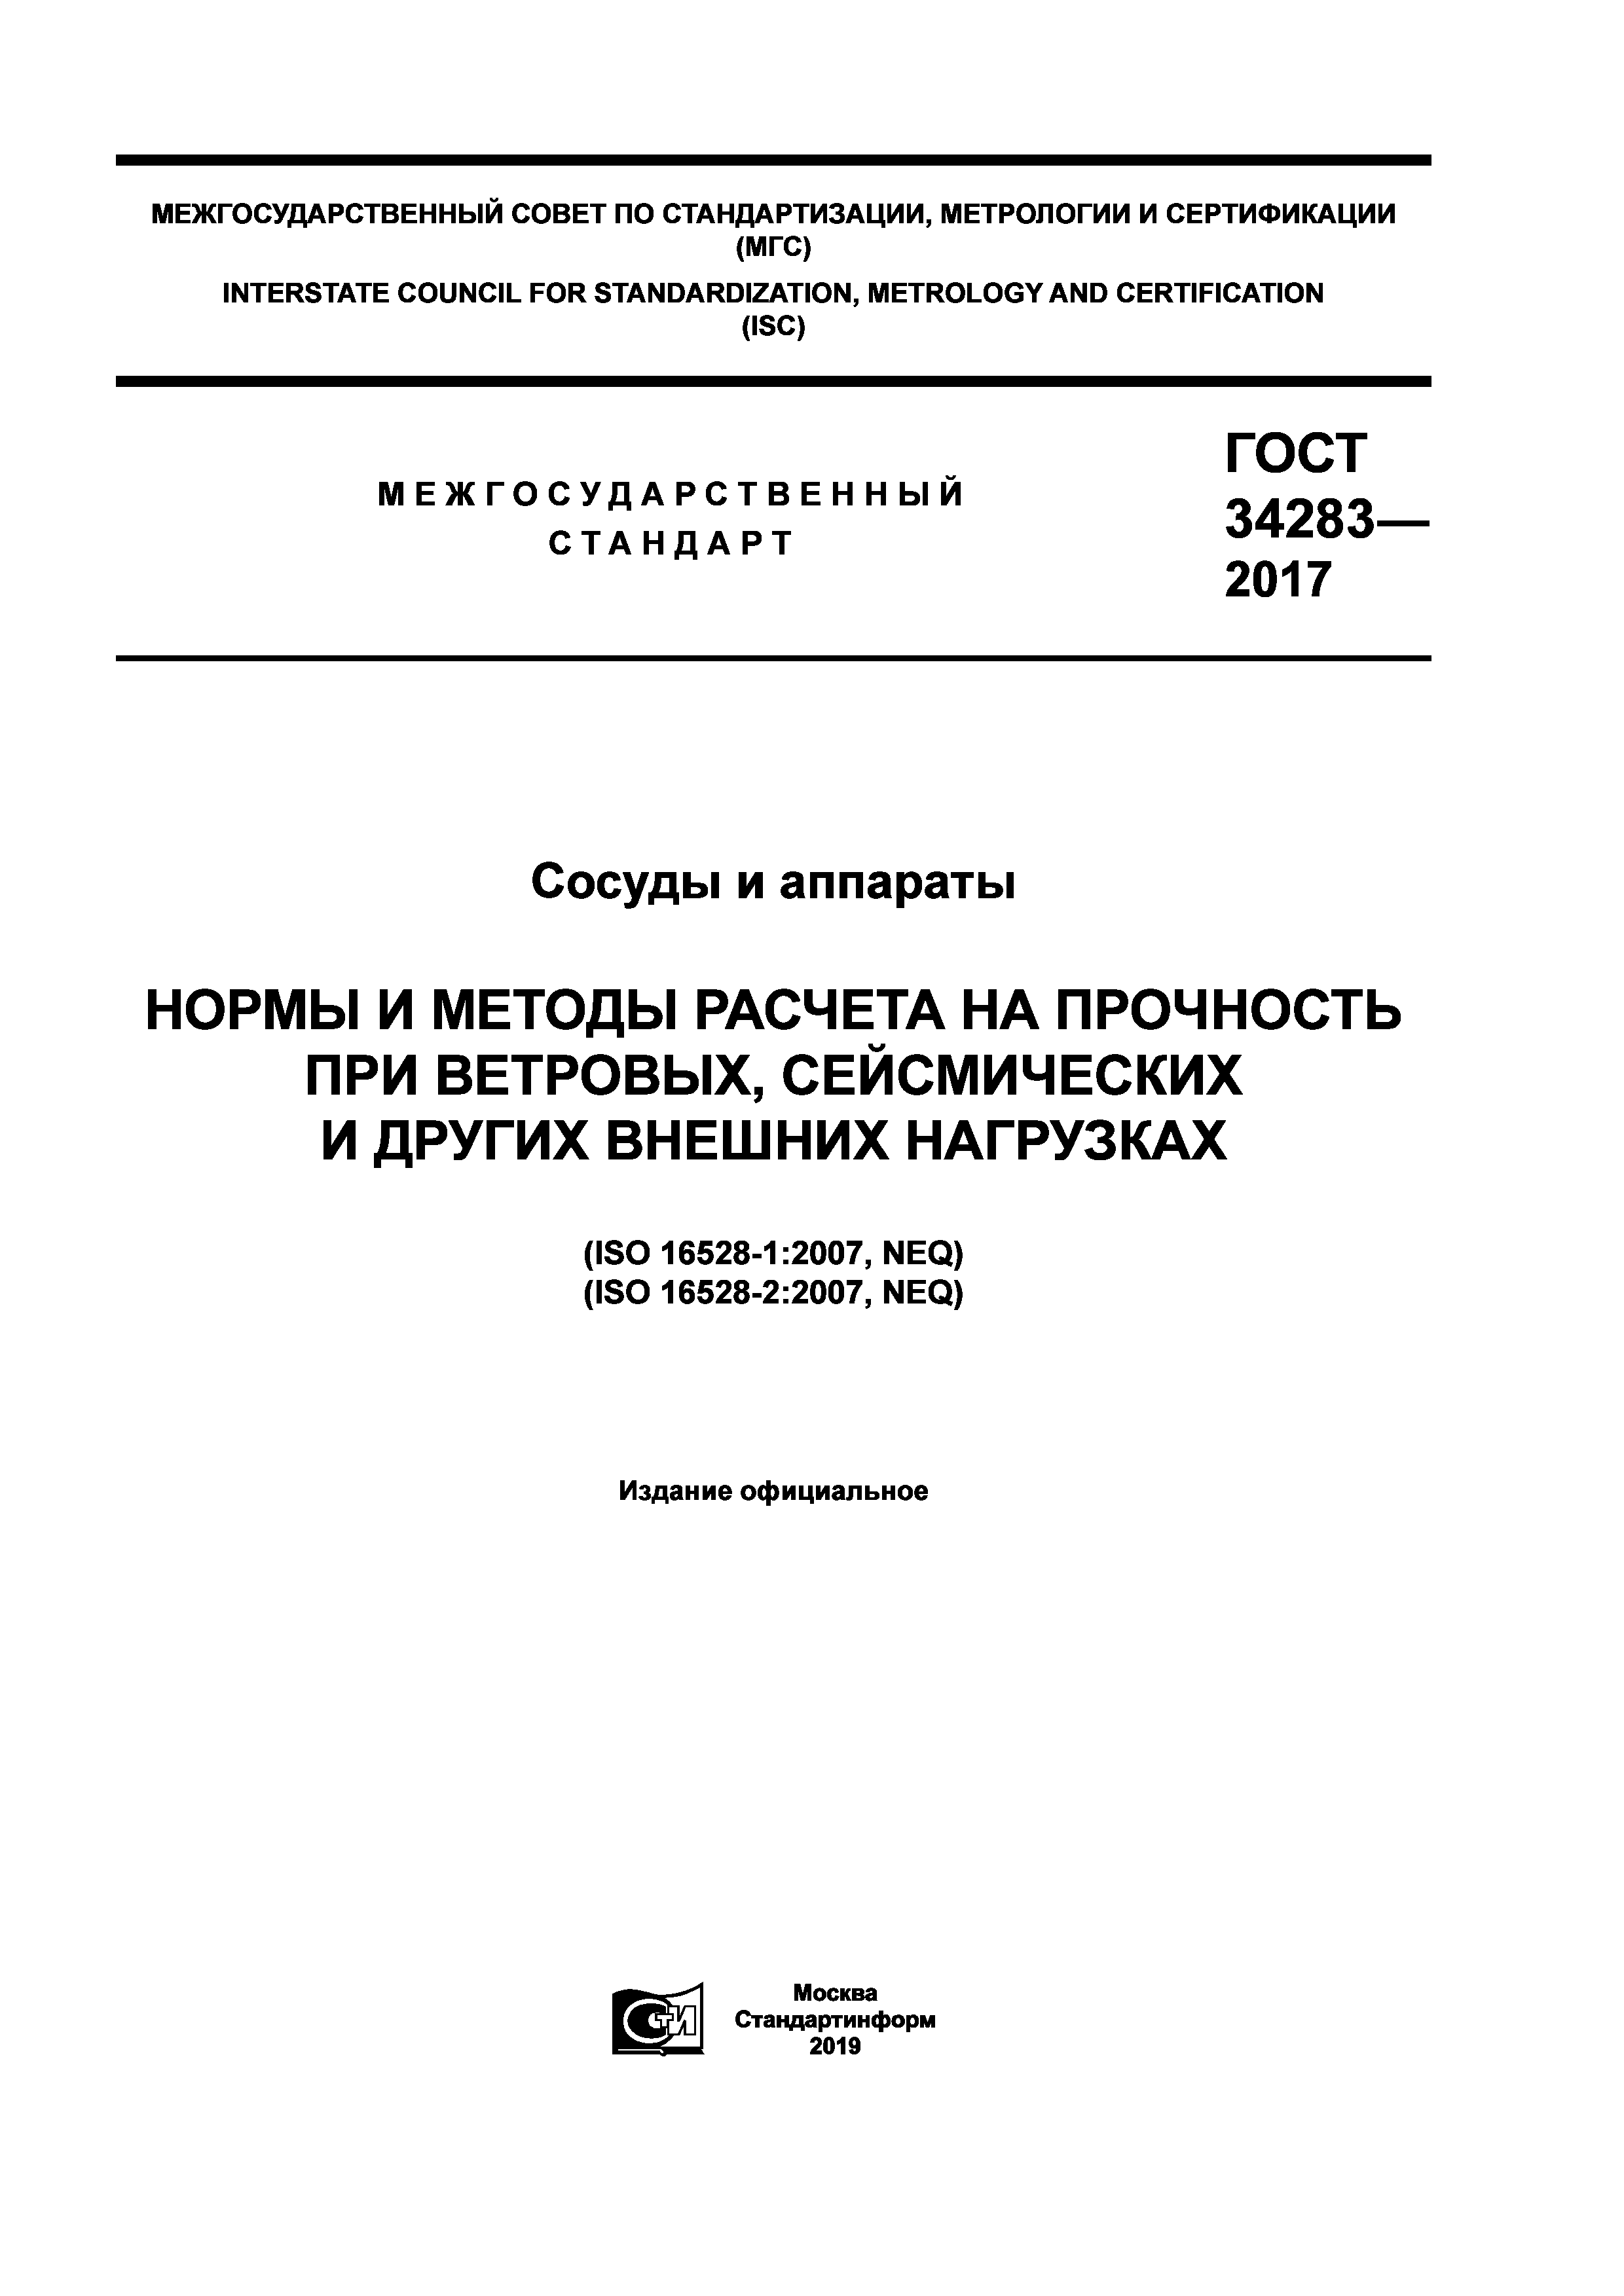 ГОСТ 34283-2017